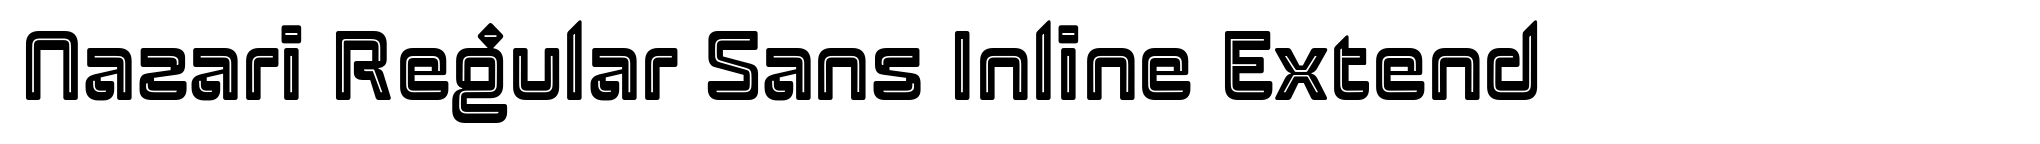 Nazari Regular Sans Inline Extend image